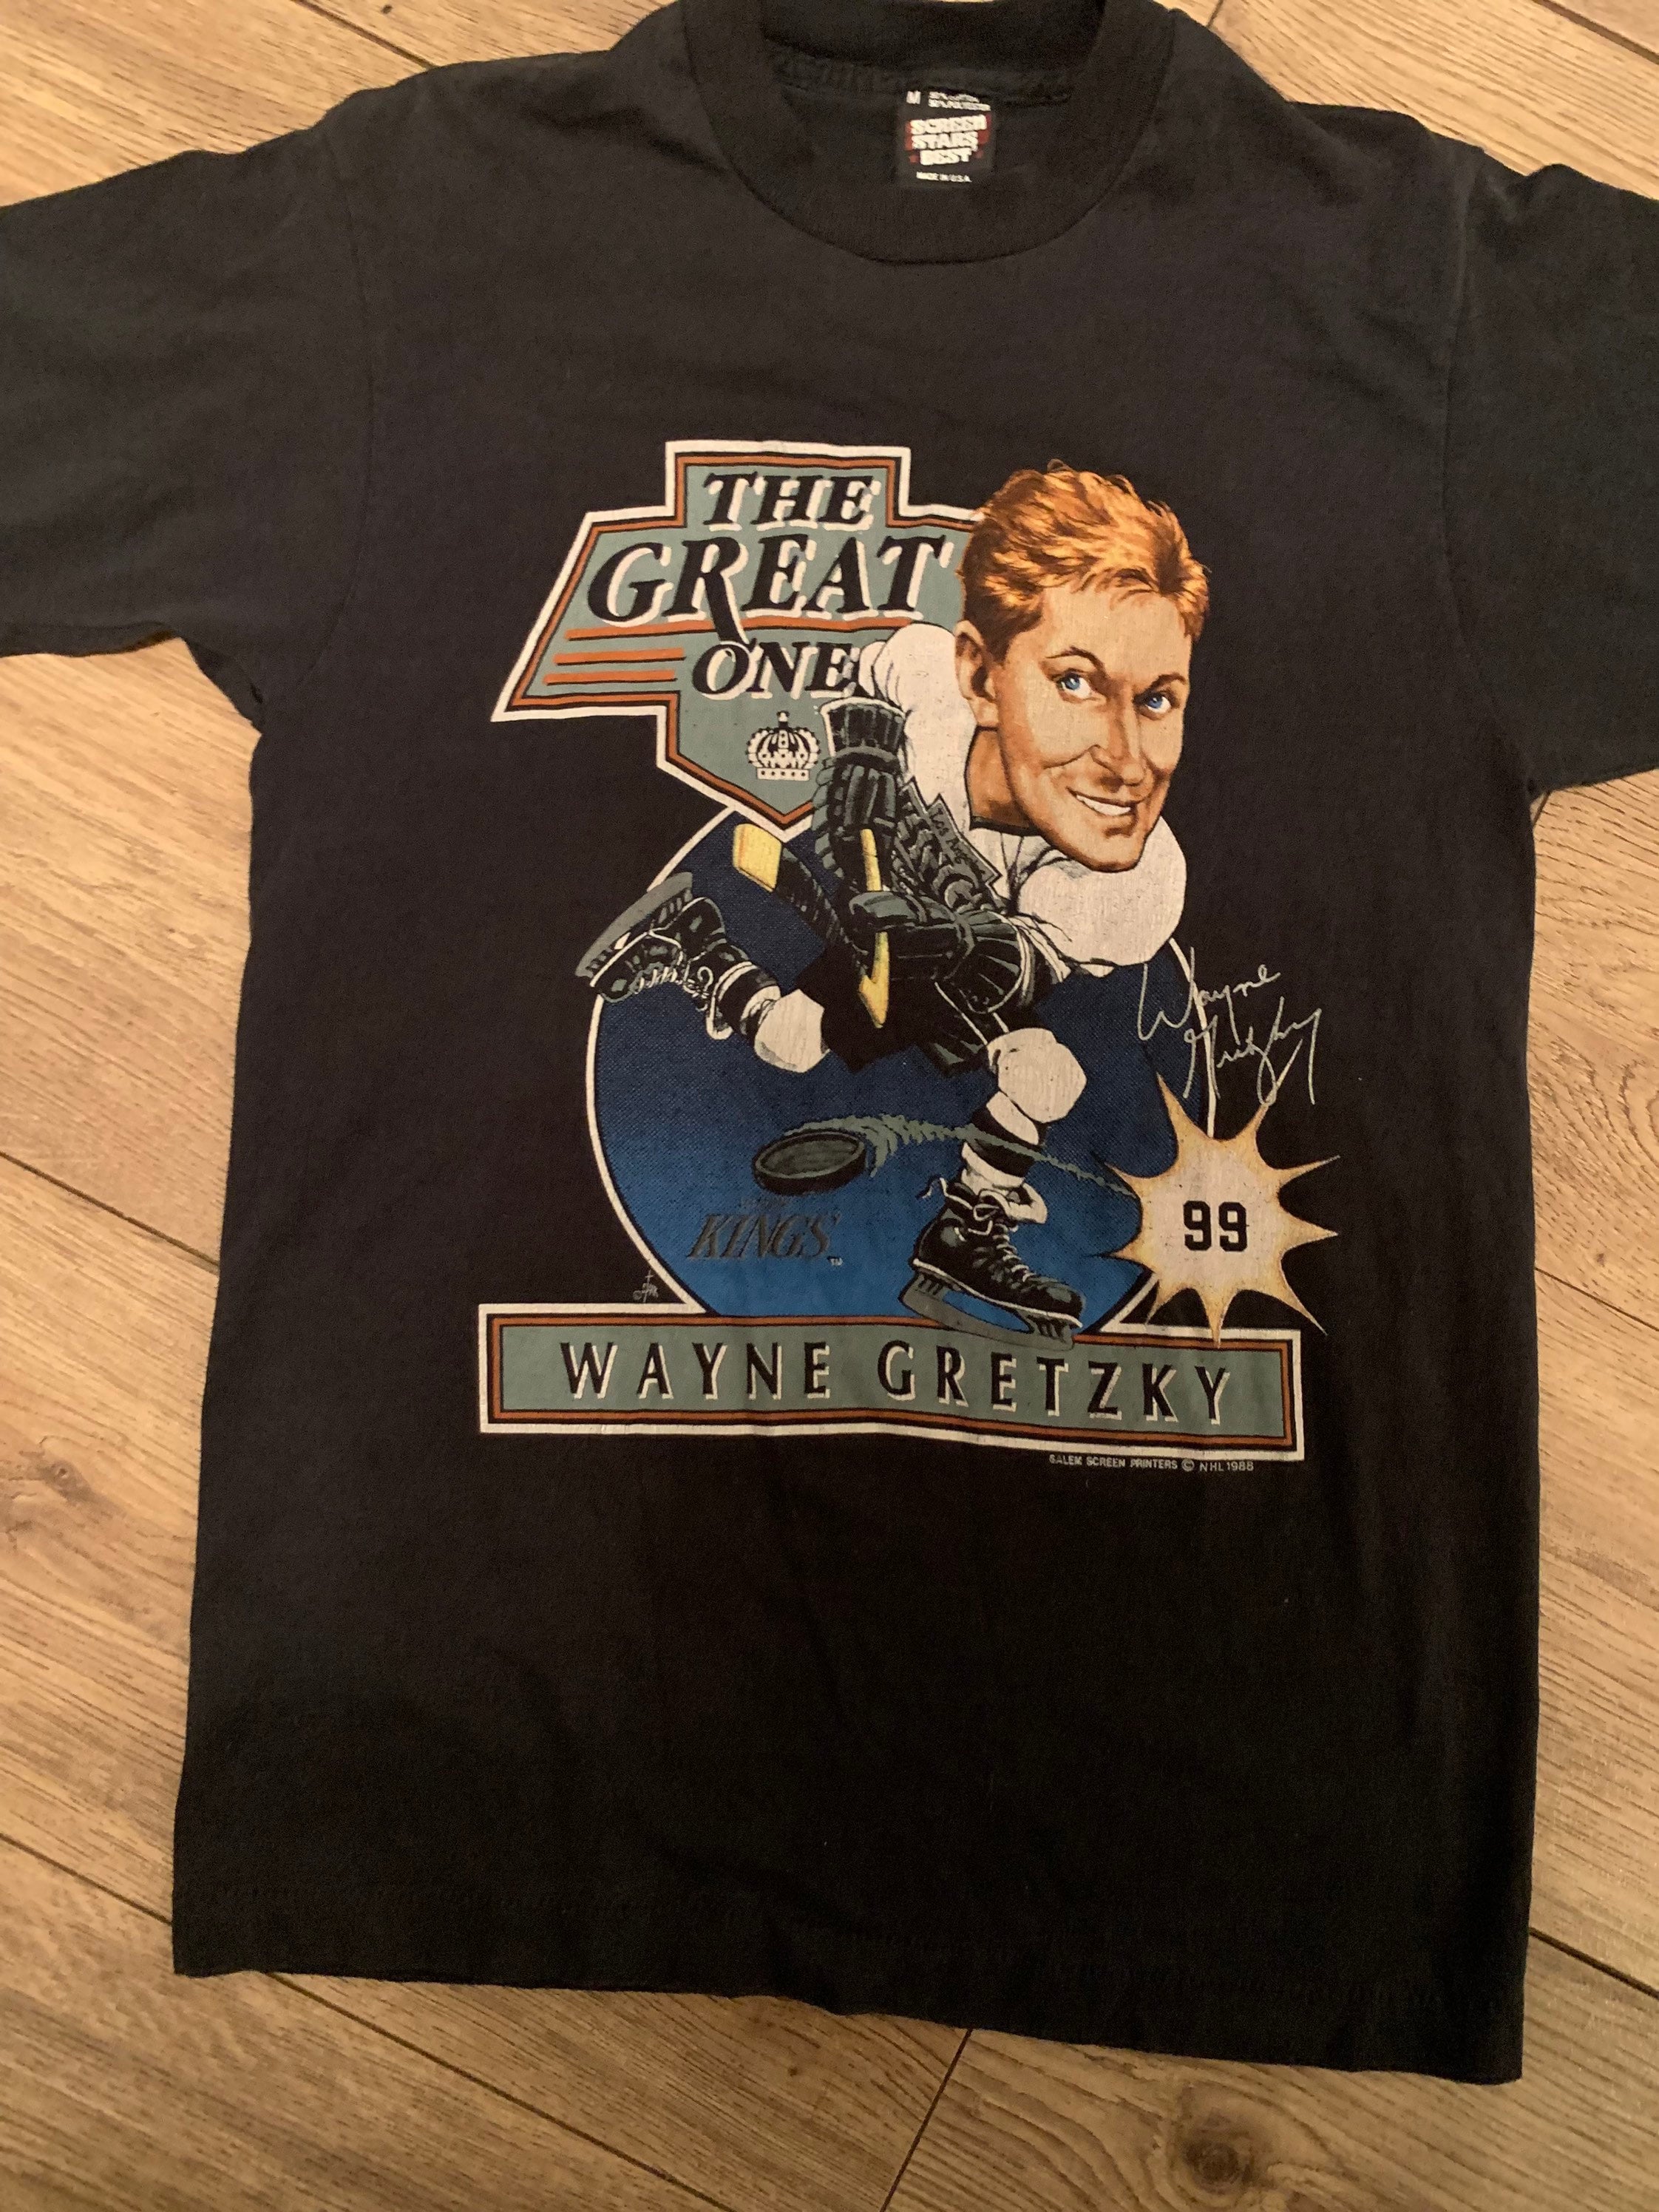  Wayne Gretzky Shirt - Vintage New York Hockey Men's Apparel -  Wayne Gretzky Bold : Sports & Outdoors